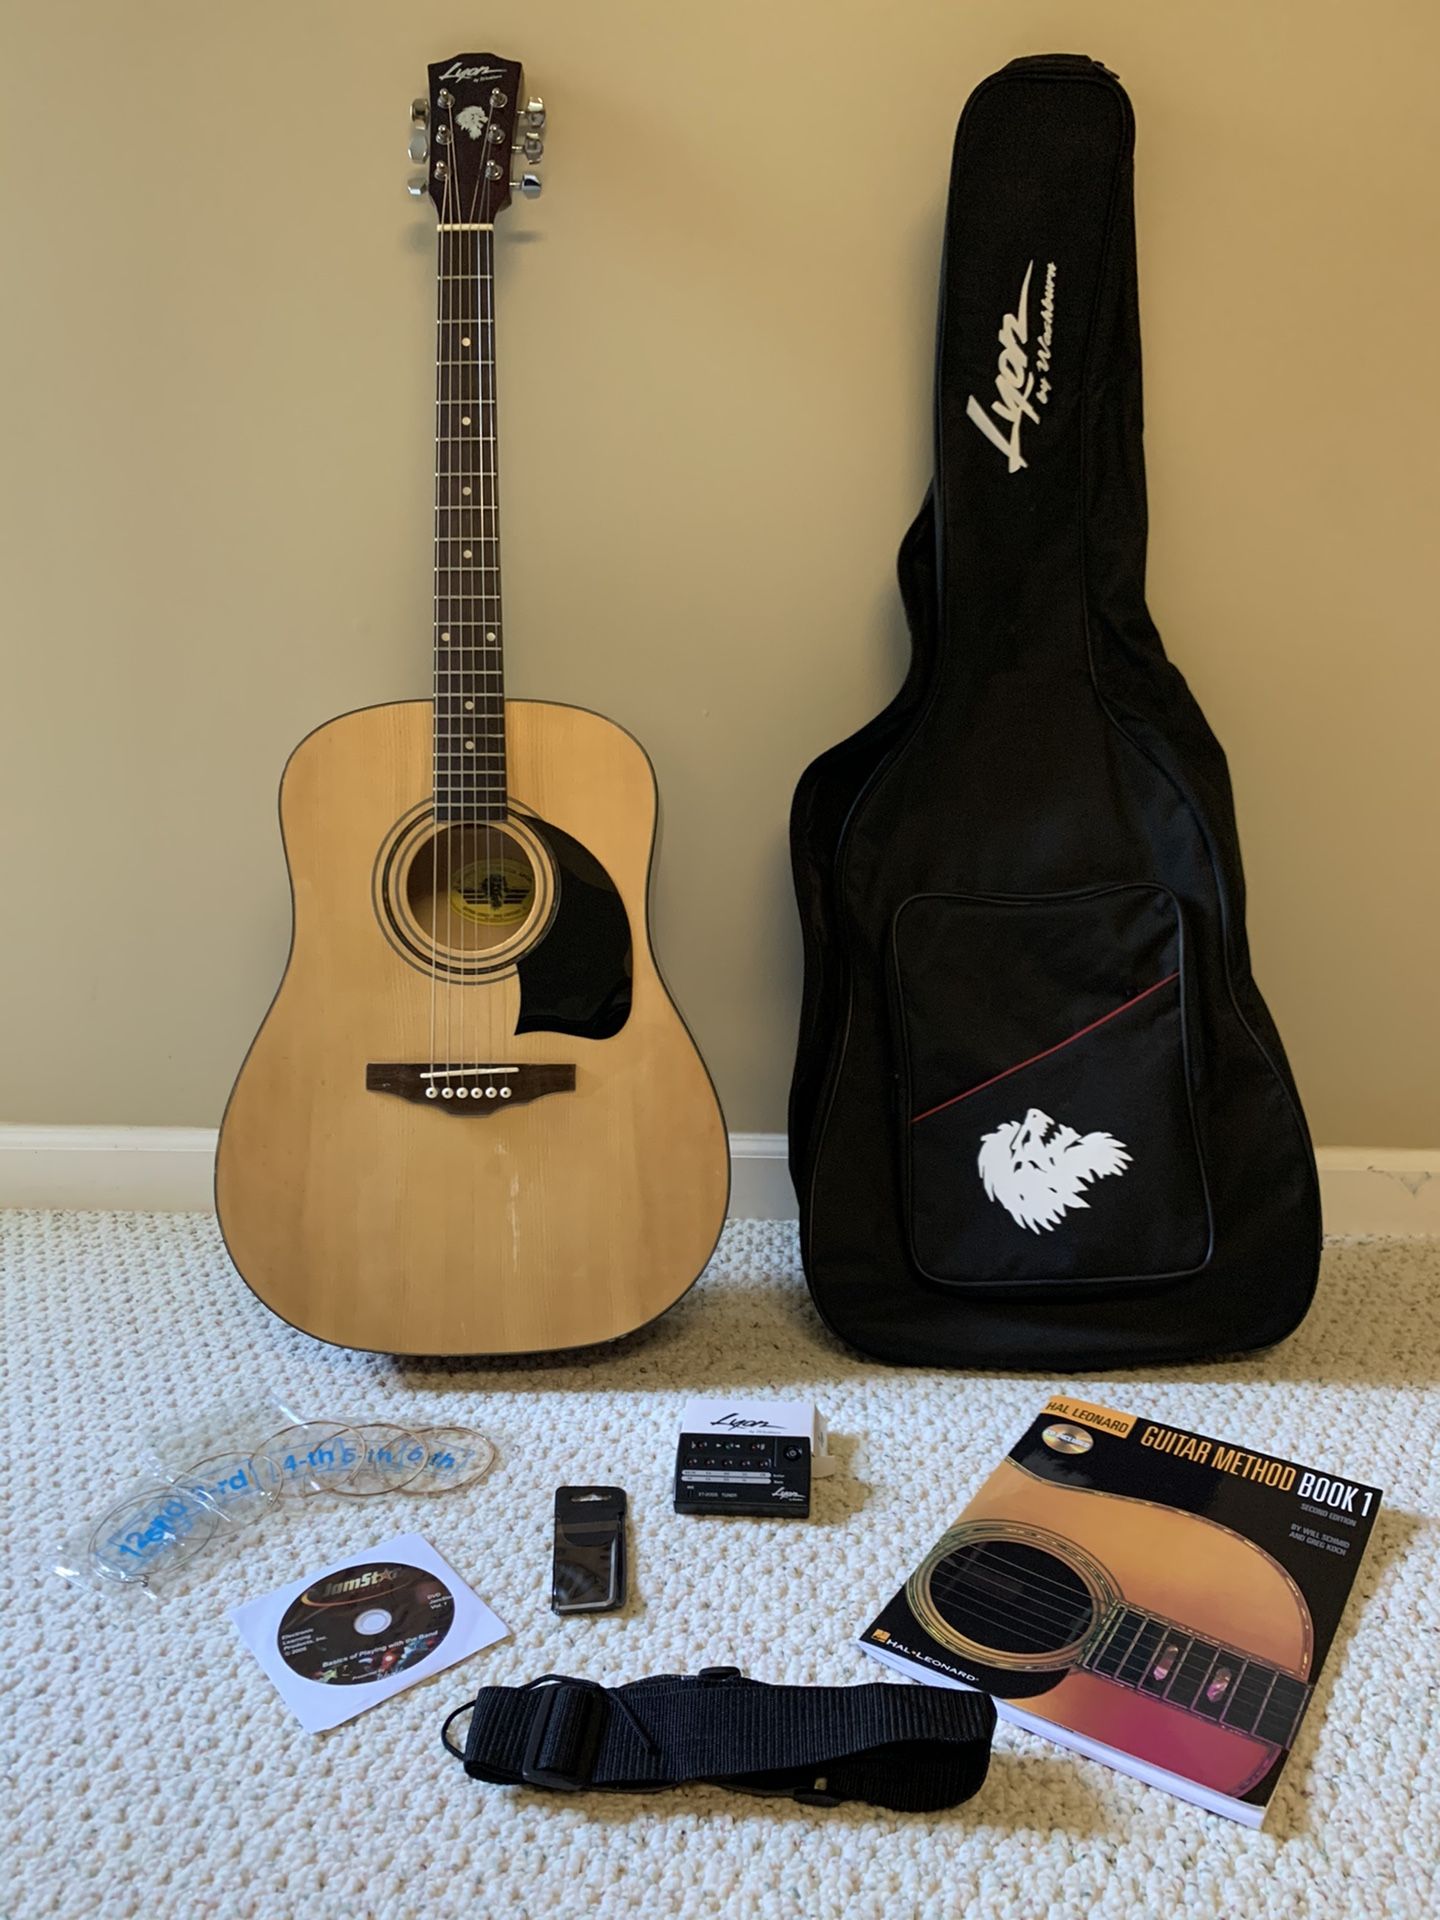 George Washburn Lyon Guitar and Accessory Set